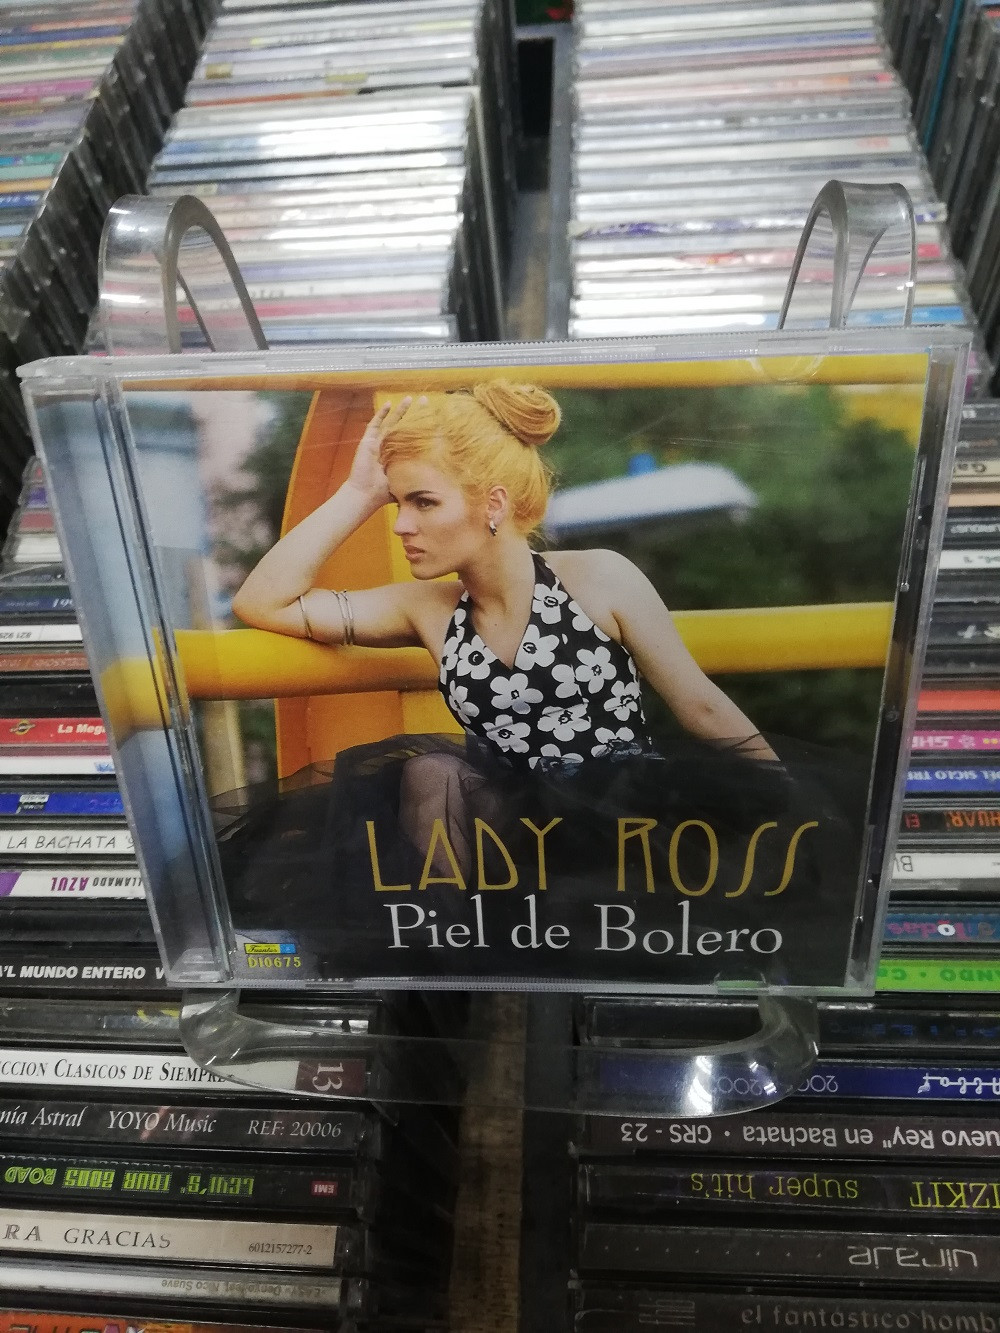 Imagen CD LADY ROSS - PIEL DE BOLERO 1